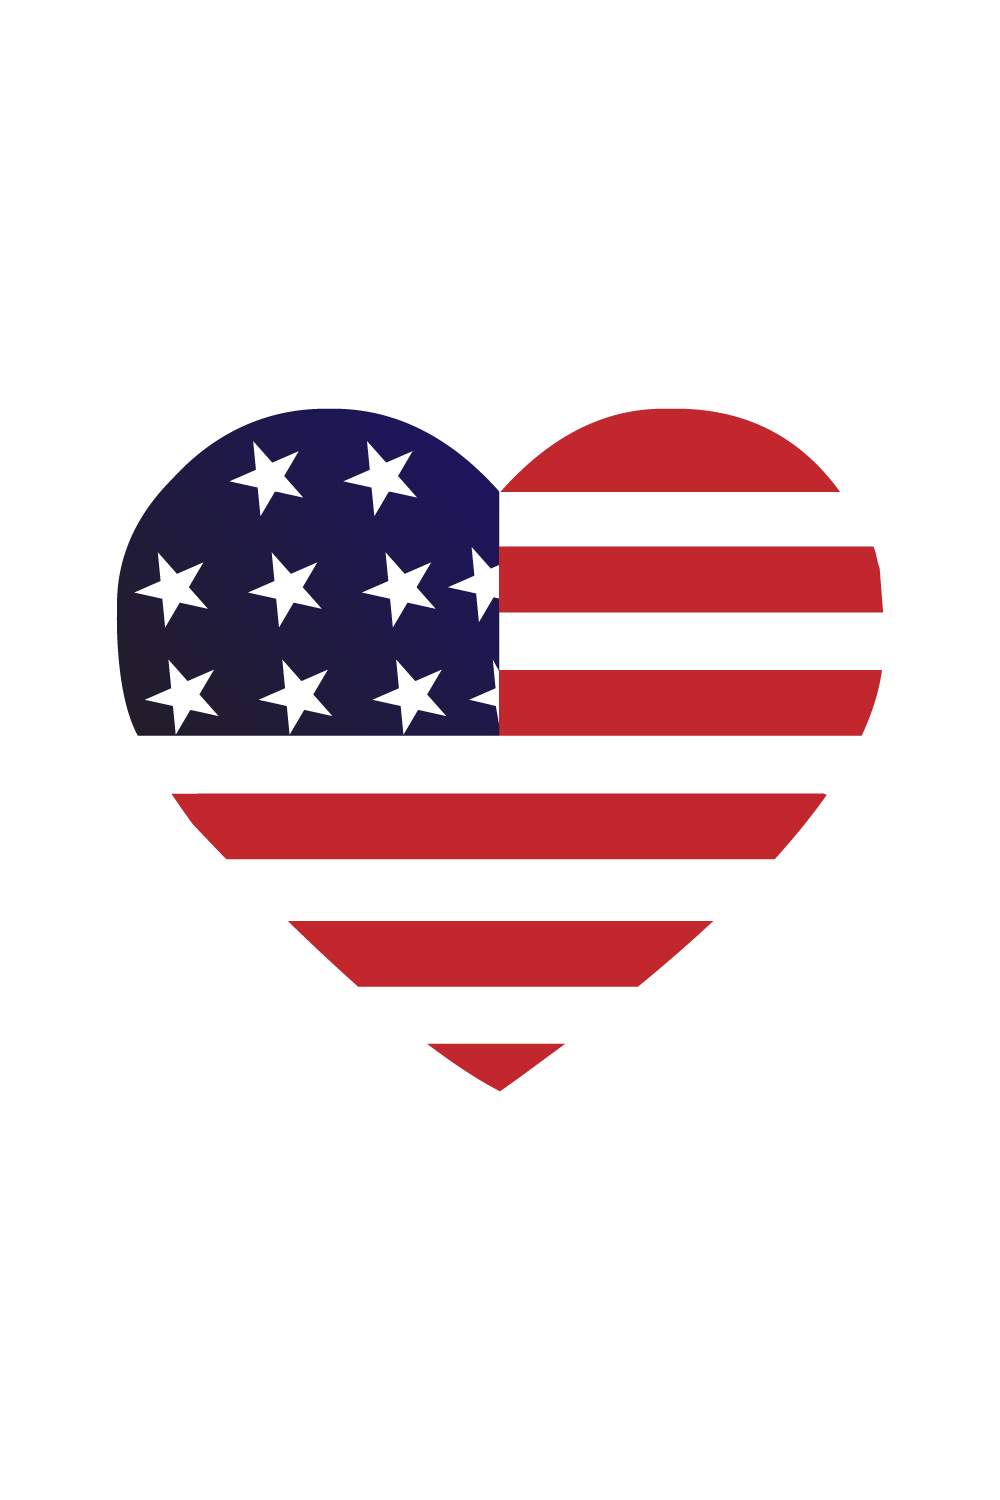 USA National flag logo design vector icon National Flag love icon template monogram illustration pinterest preview image.